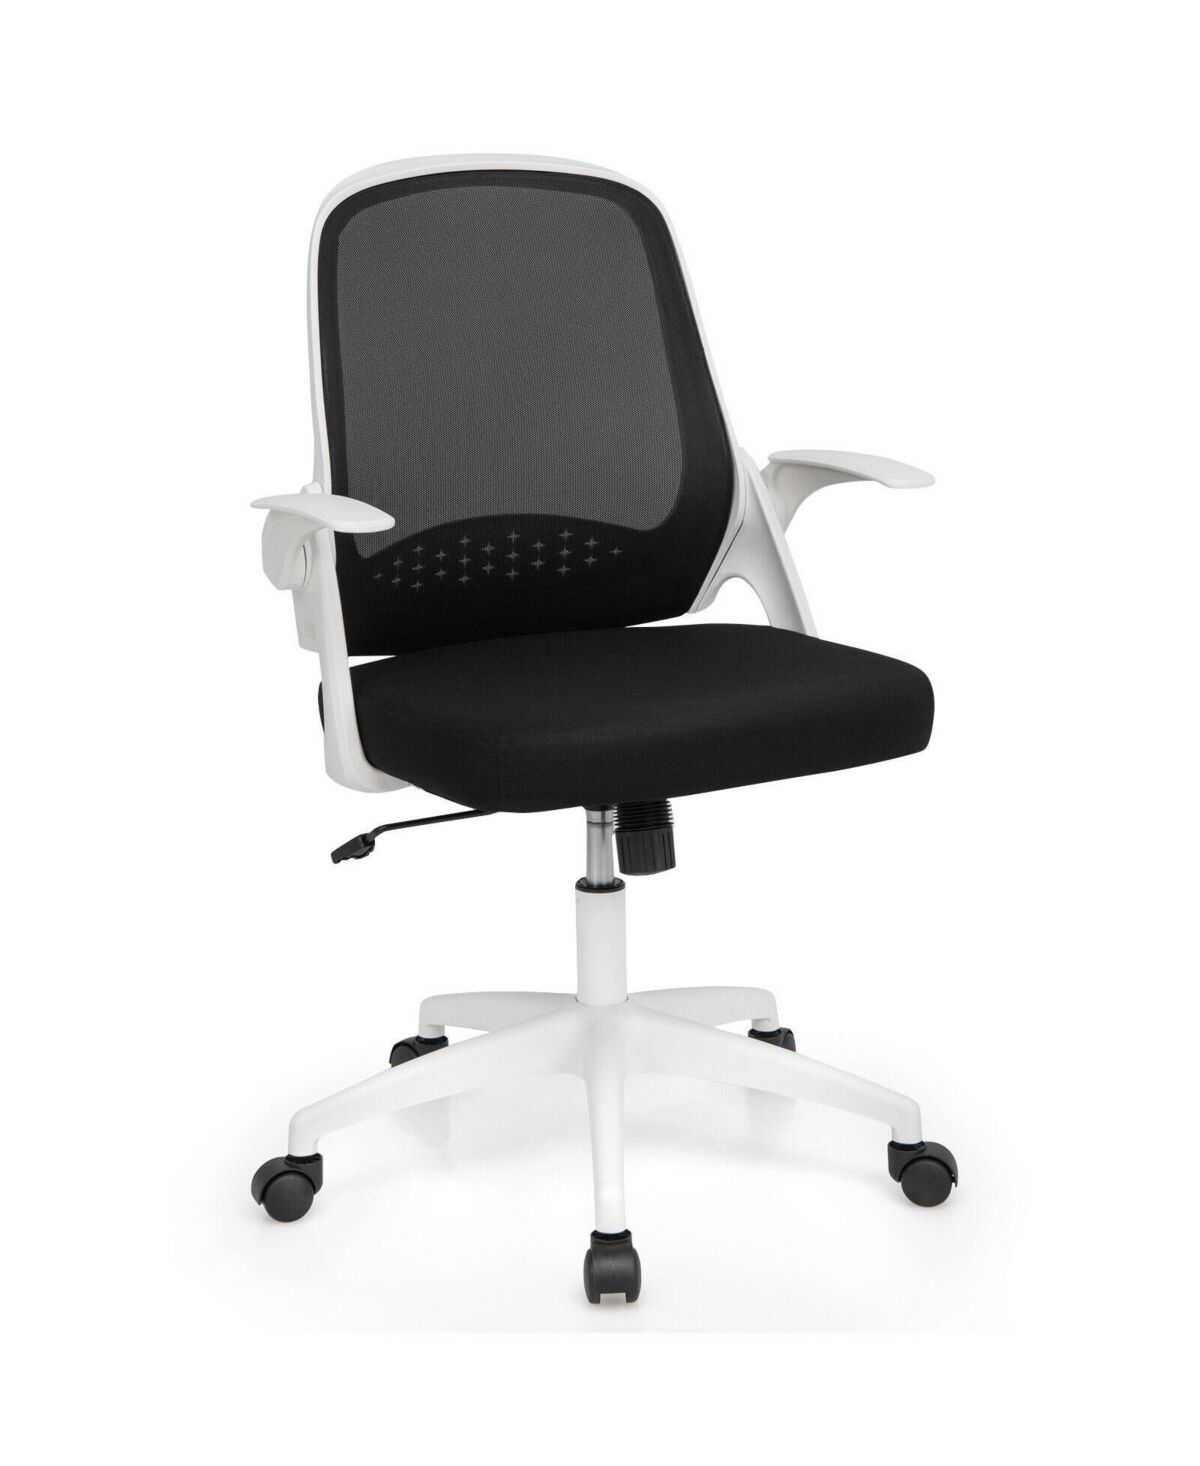 Slickblue Adjustable Mesh Office Chair Rolling Computer Desk Chair with Flip-up Armrest - White